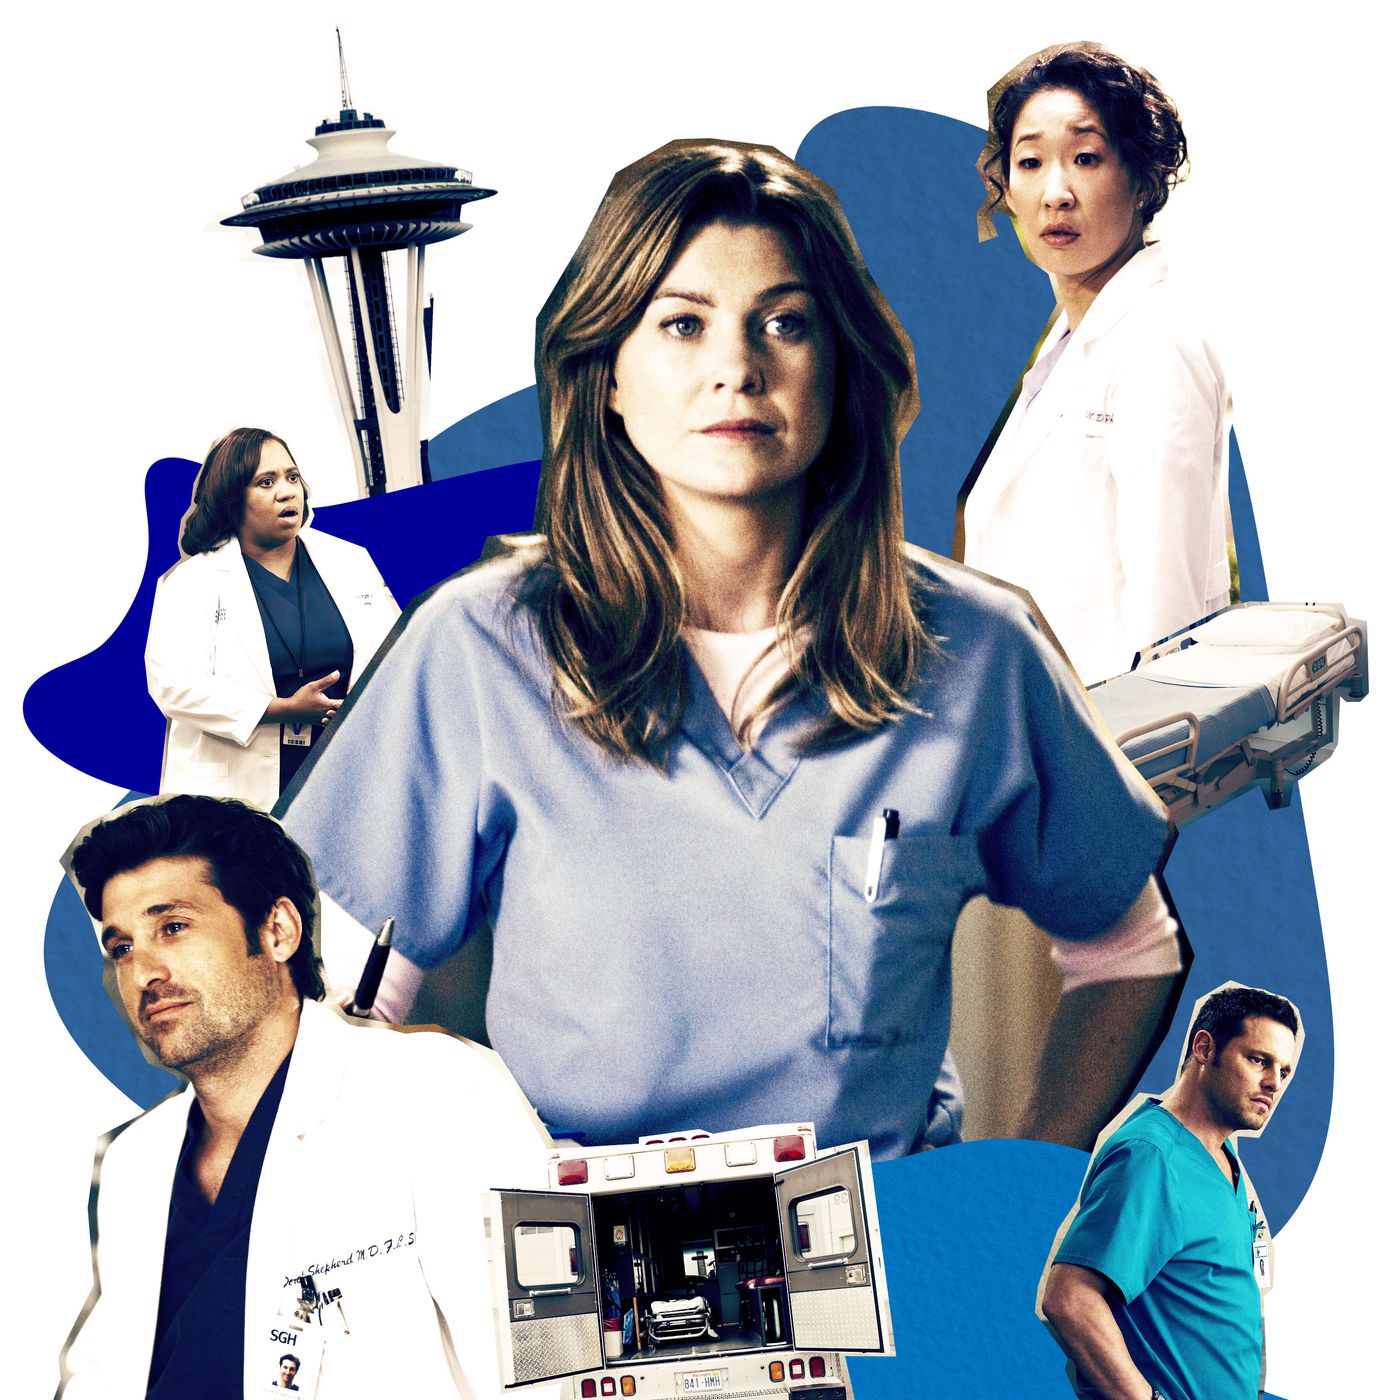 A Rundown of the Best and Worst 'Grey's Anatomy' Episodes